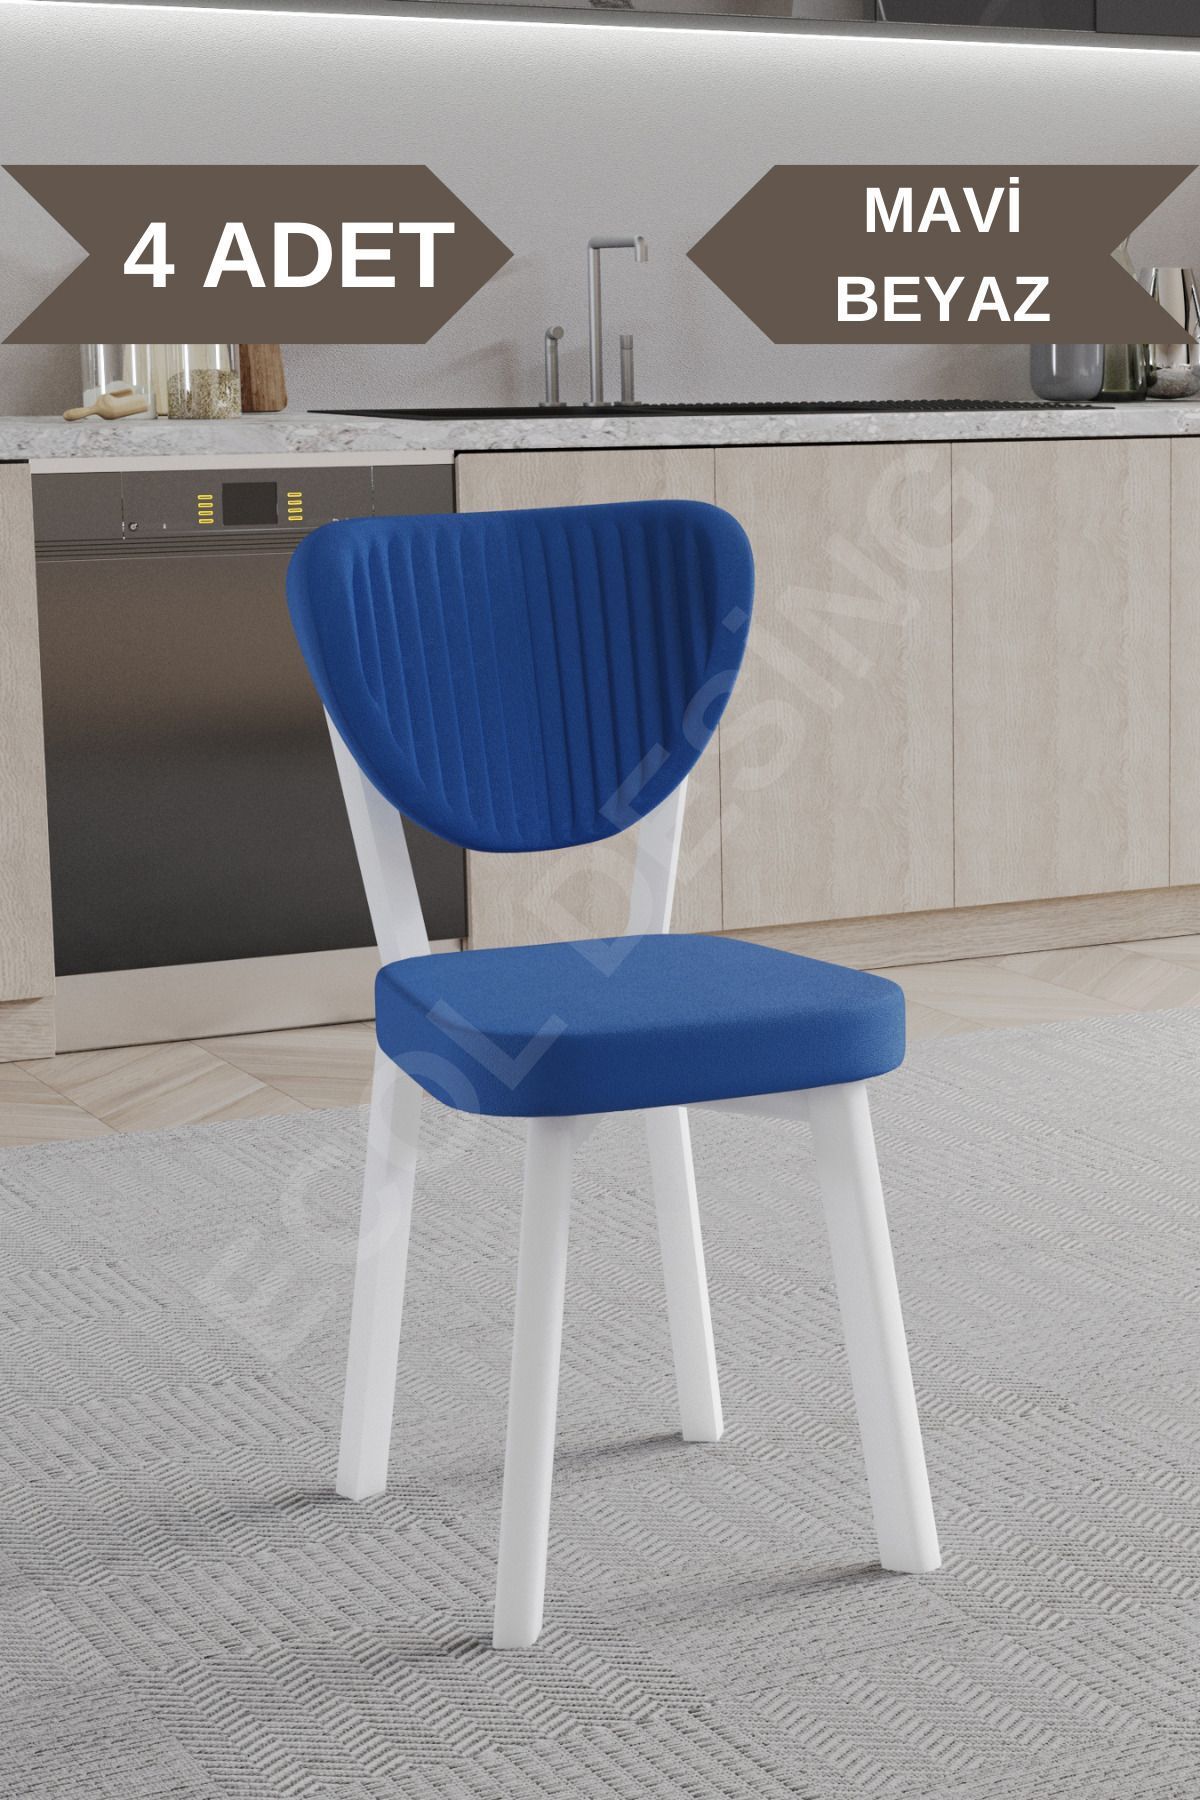 FAYMEND 4 Adet Elma Model Mutfak Sandalyesi Salon Sandalyesi Yemek Sandalyesi Cafe Restaurant Sandalyesi